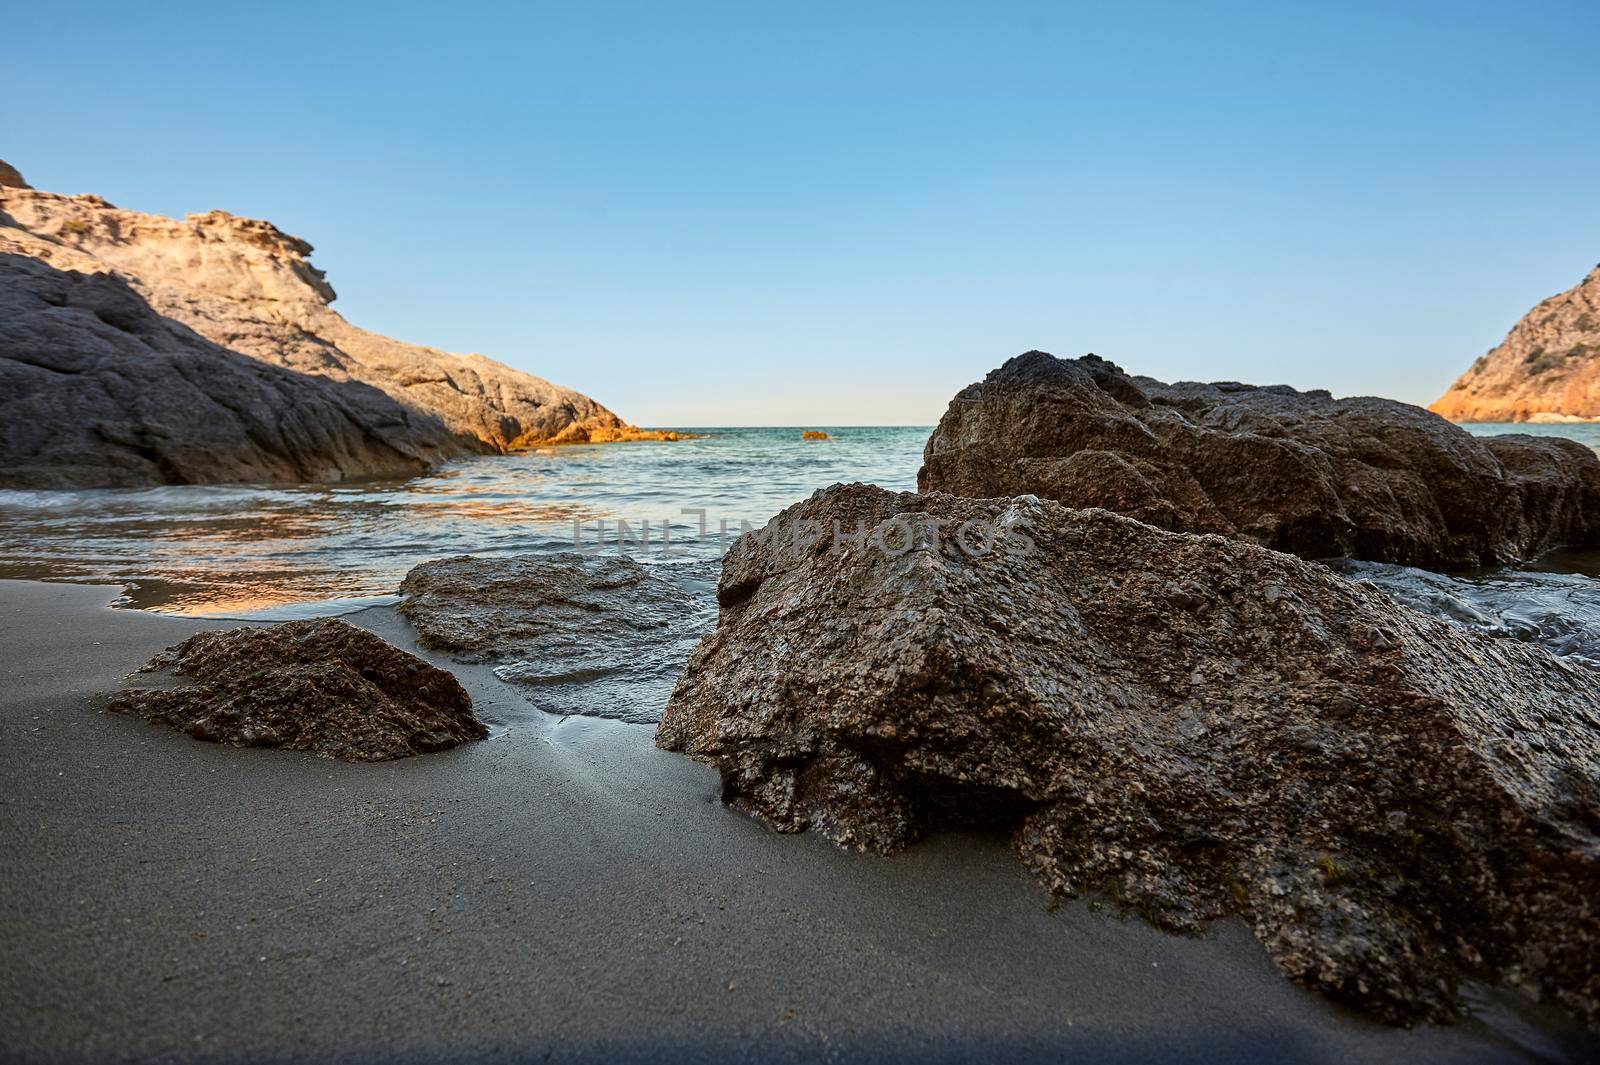 The rocks of Sardinia by pippocarlot